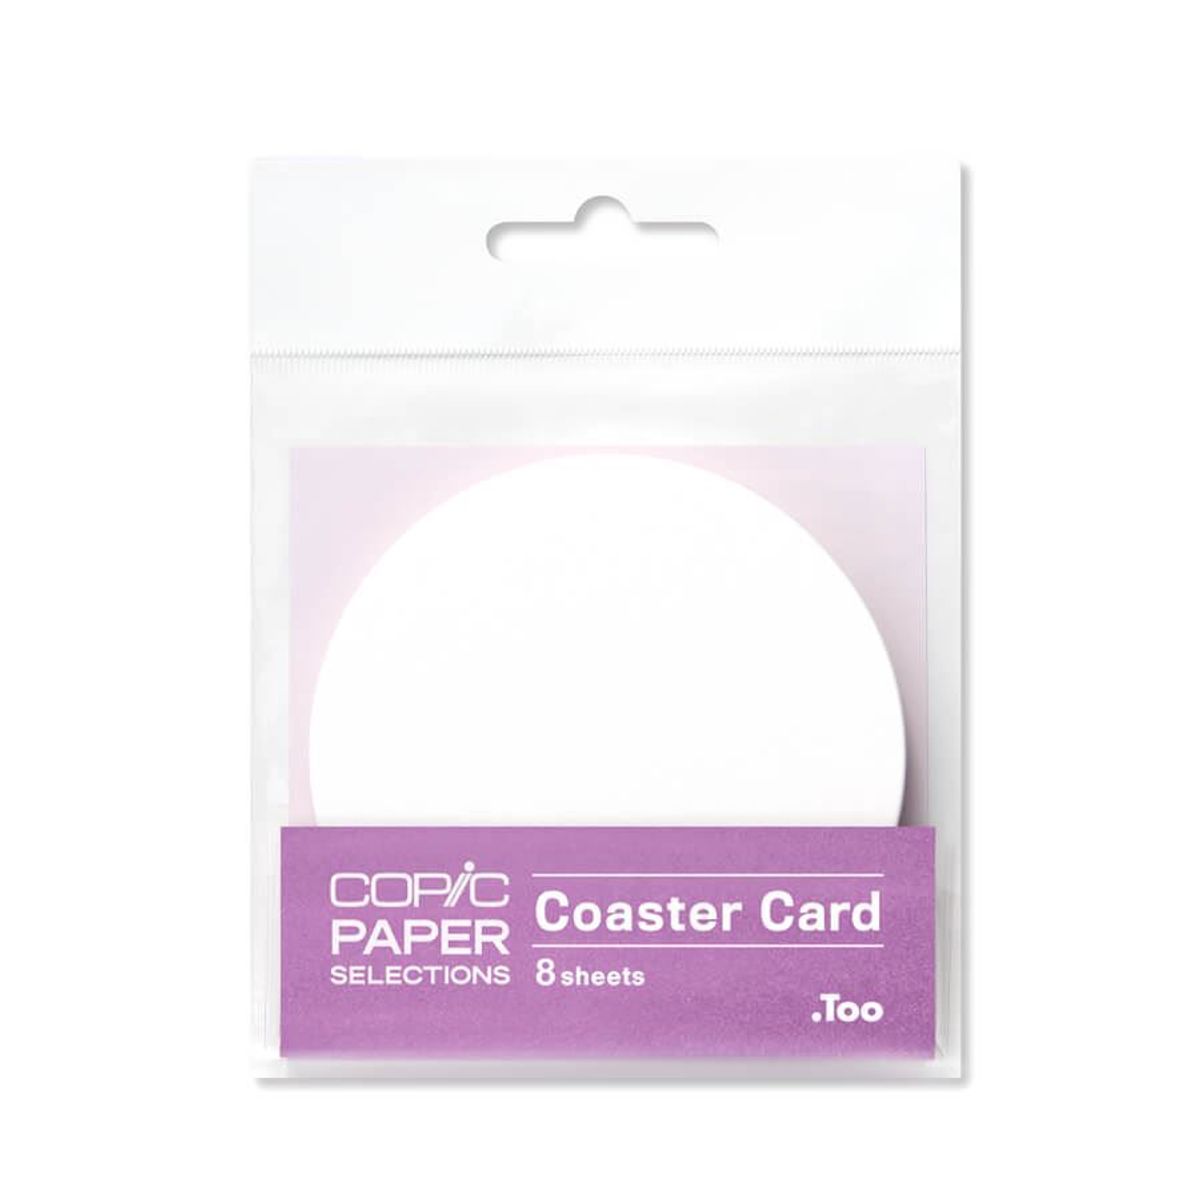 Papel Copic Coaster Card C/ 8 Unidades